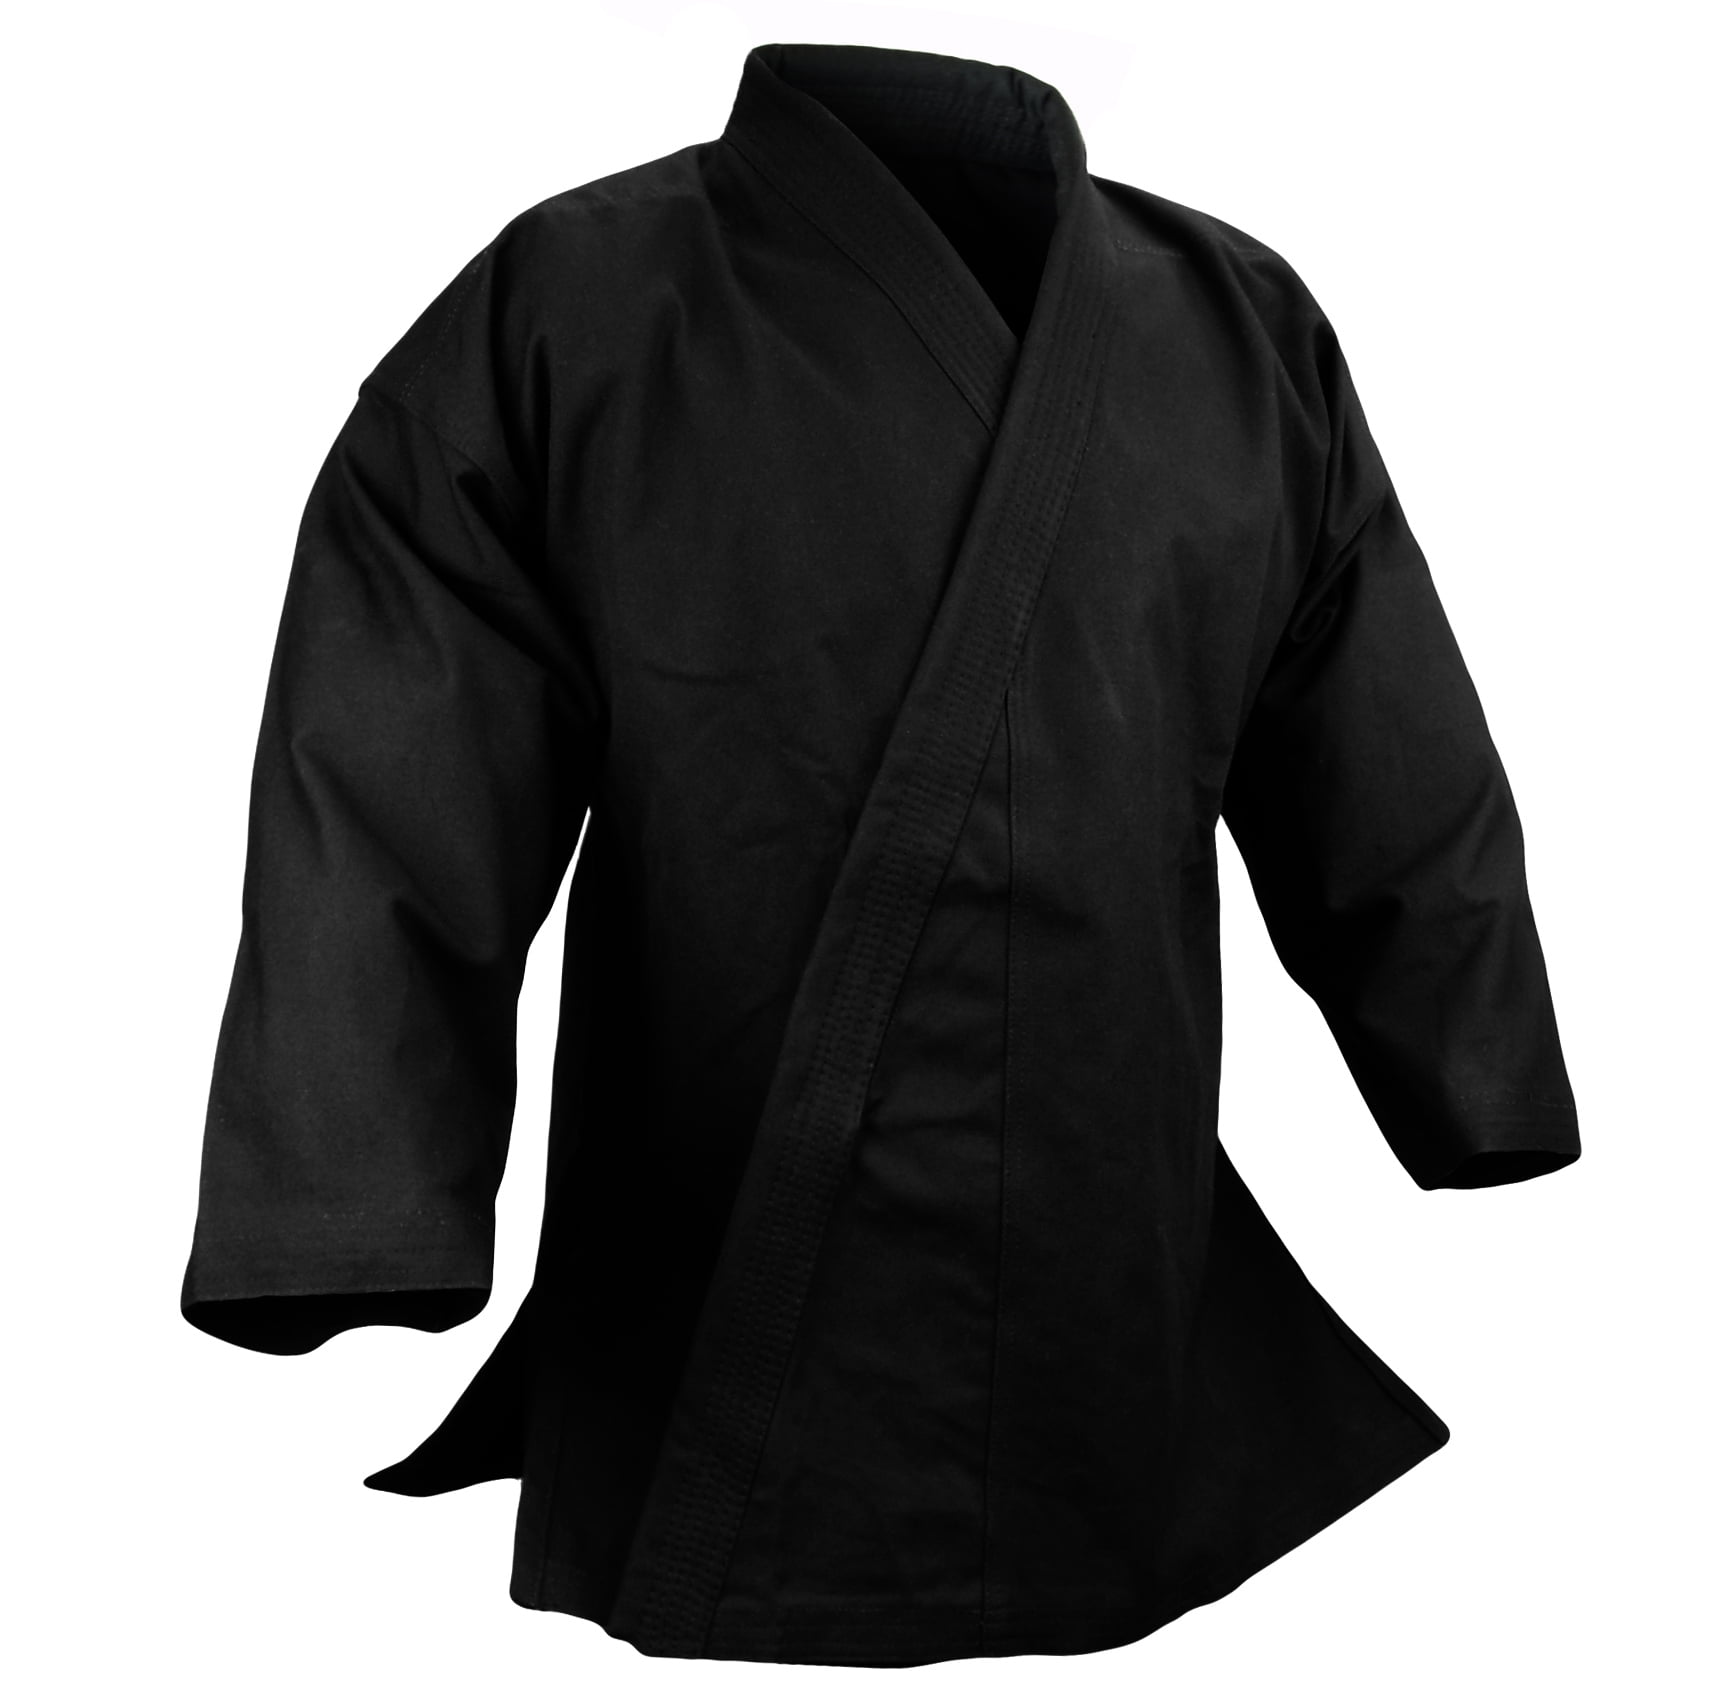 TurnerMAX Quality Cotton karate Martial Arts Uniform Suit gi Kung Fu MMA Black 